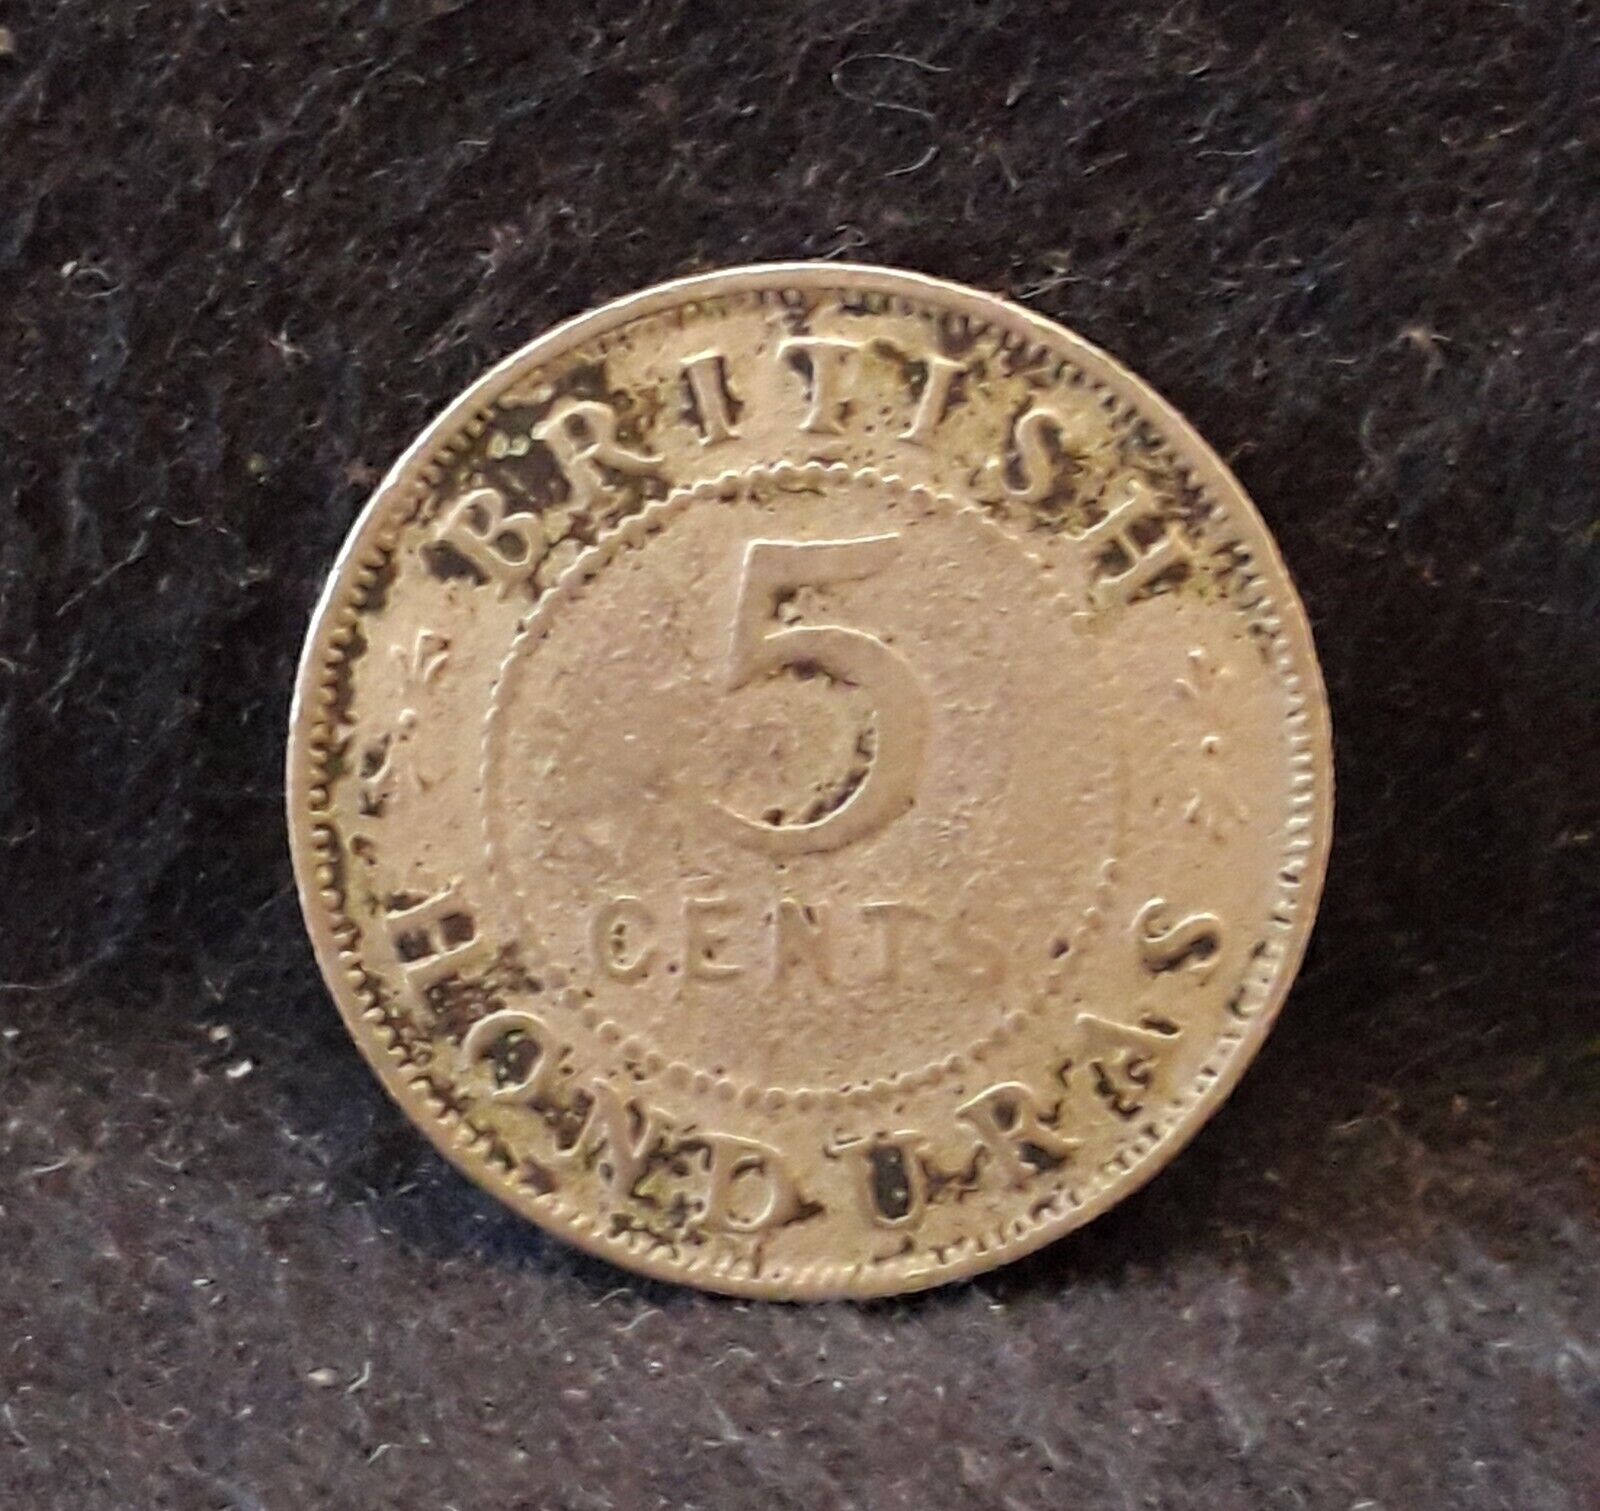 1916-H British Honduras 5 cents, 20,000 minted, scarce, KM-16 (BH4)